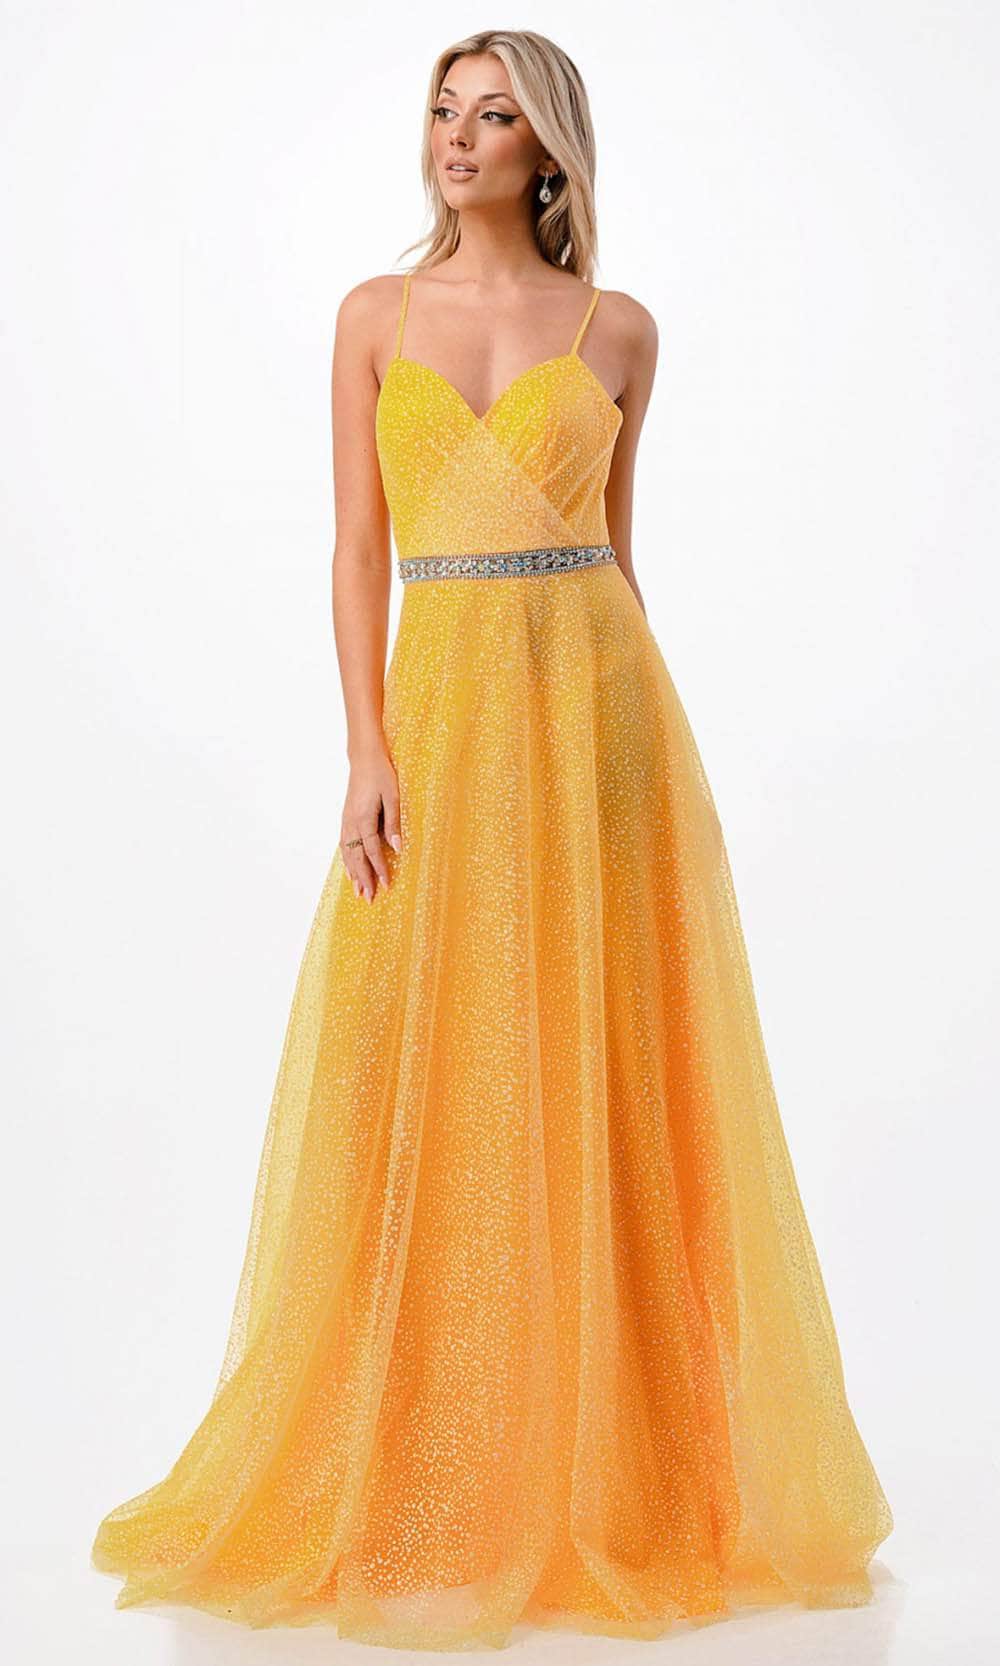 Aspeed Design P2105 - Spaghetti Straps Beaded Prom Gown
